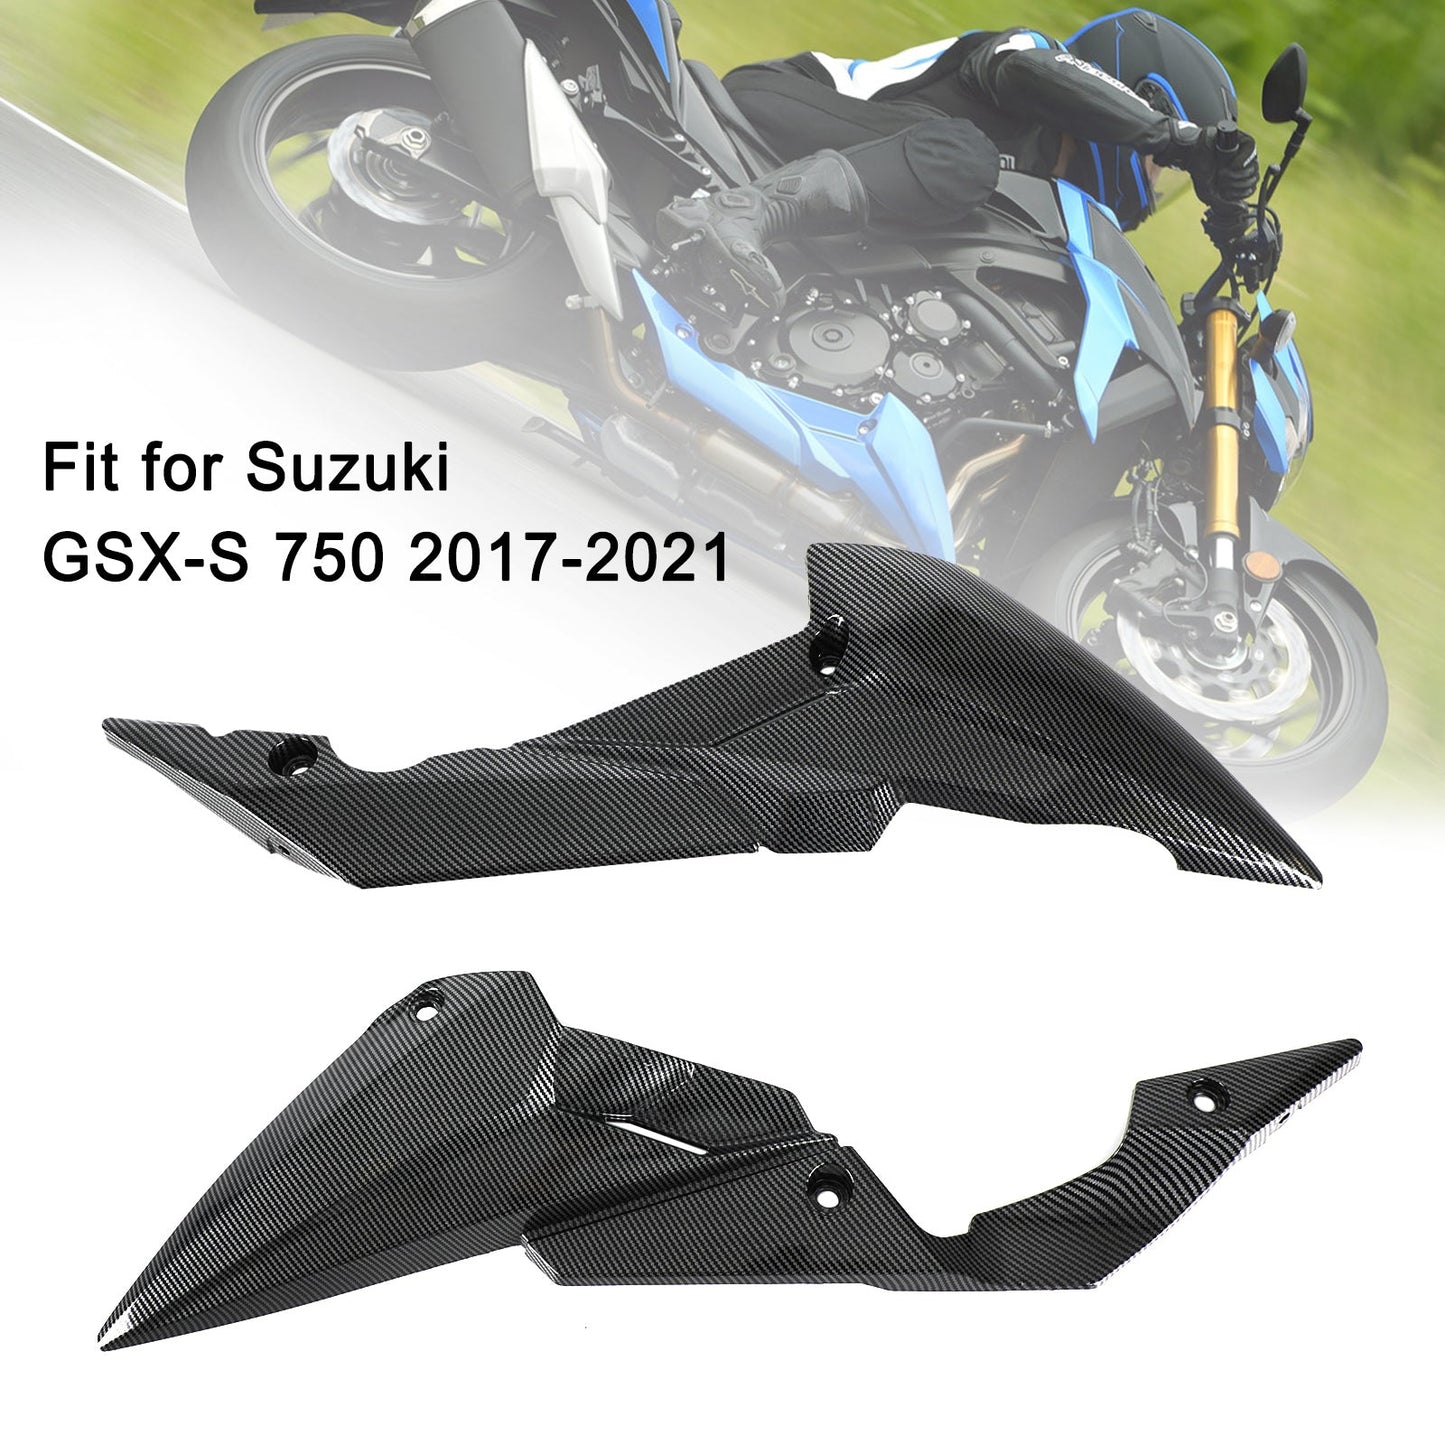 Lower Bottom Oil Belly Pan Guard Fairing For Suzuki GSXS GSX-S750 2017-2021 Black